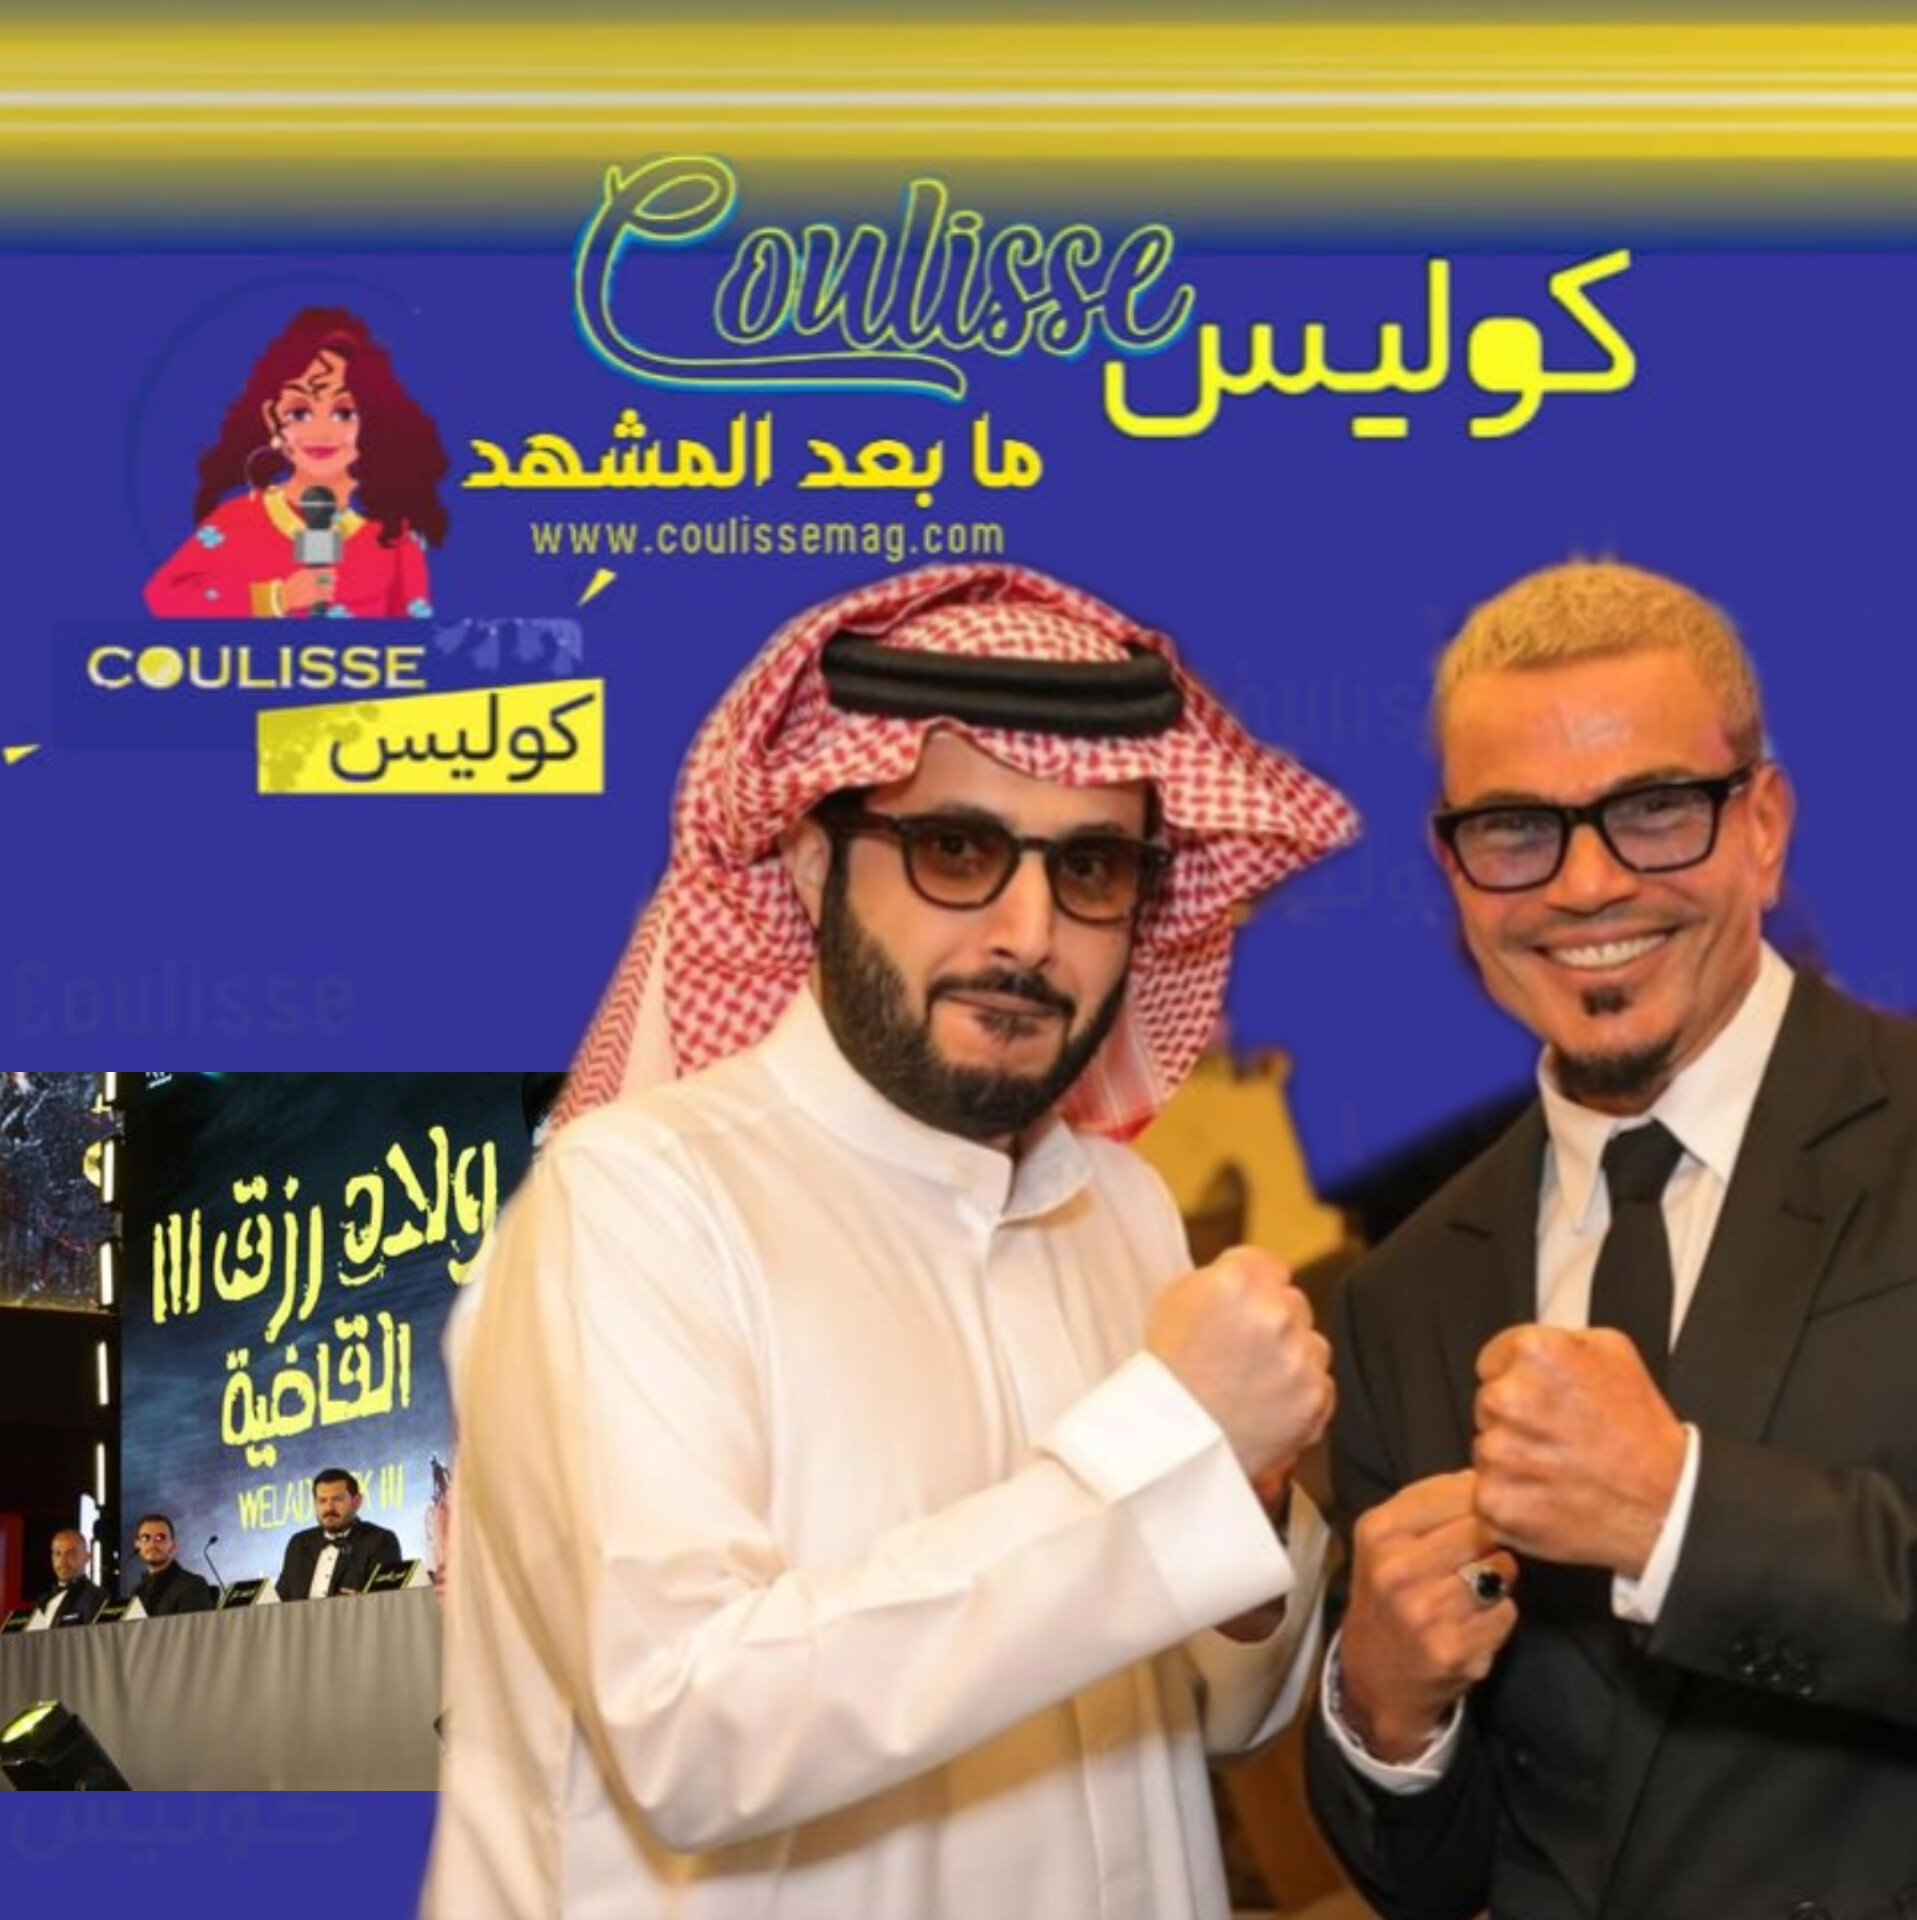 عمرو دياب ضيف فيلم ولاد رزق ٣ كيف؟ – صور وفيديو